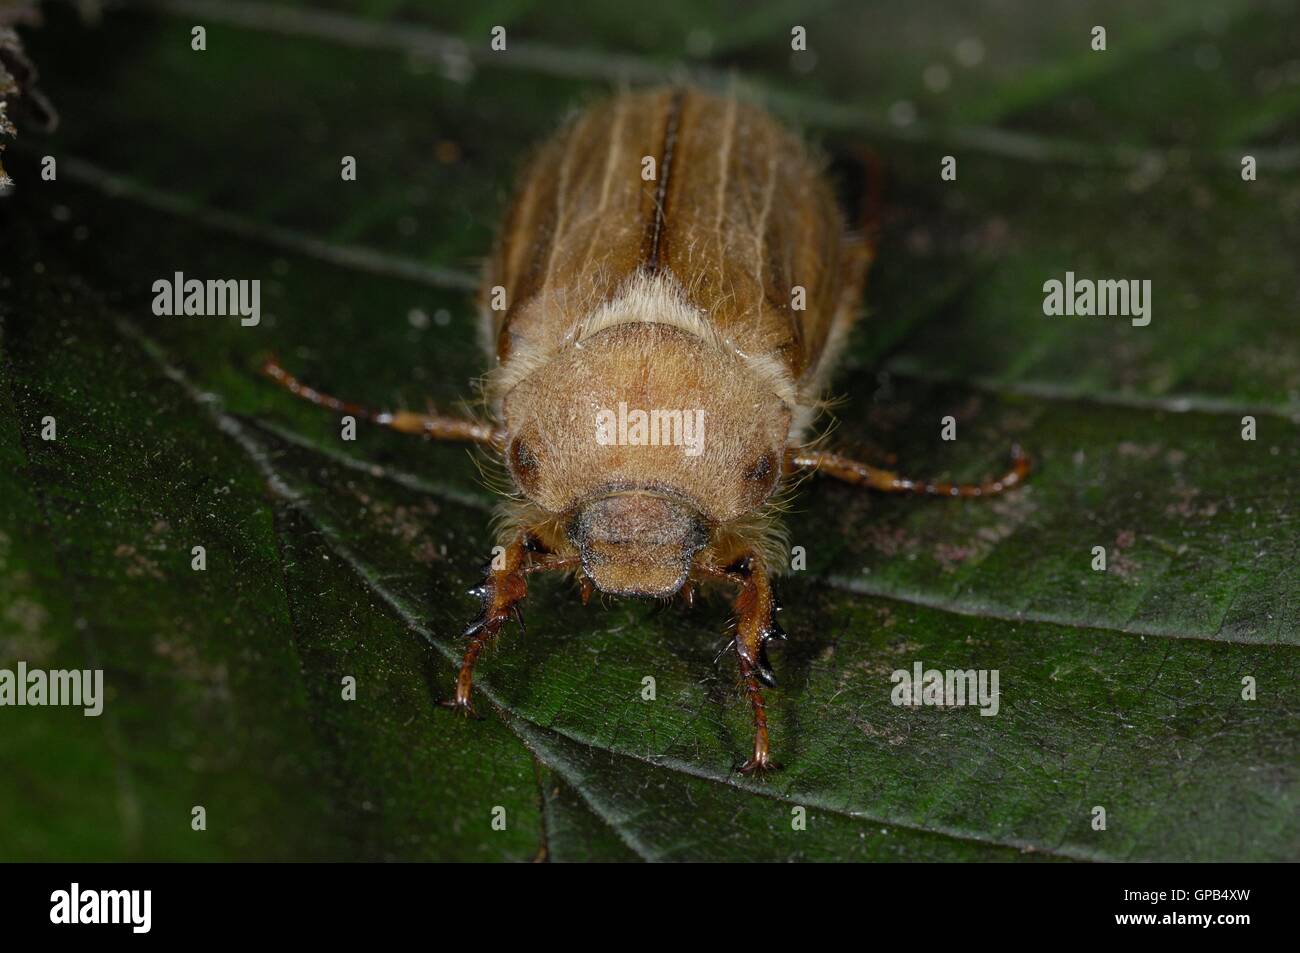 European June beetle - Summer chafer (Amphimallon solstitialis - Rhizotrogus solstitiale) on a leaf at spring Stock Photo